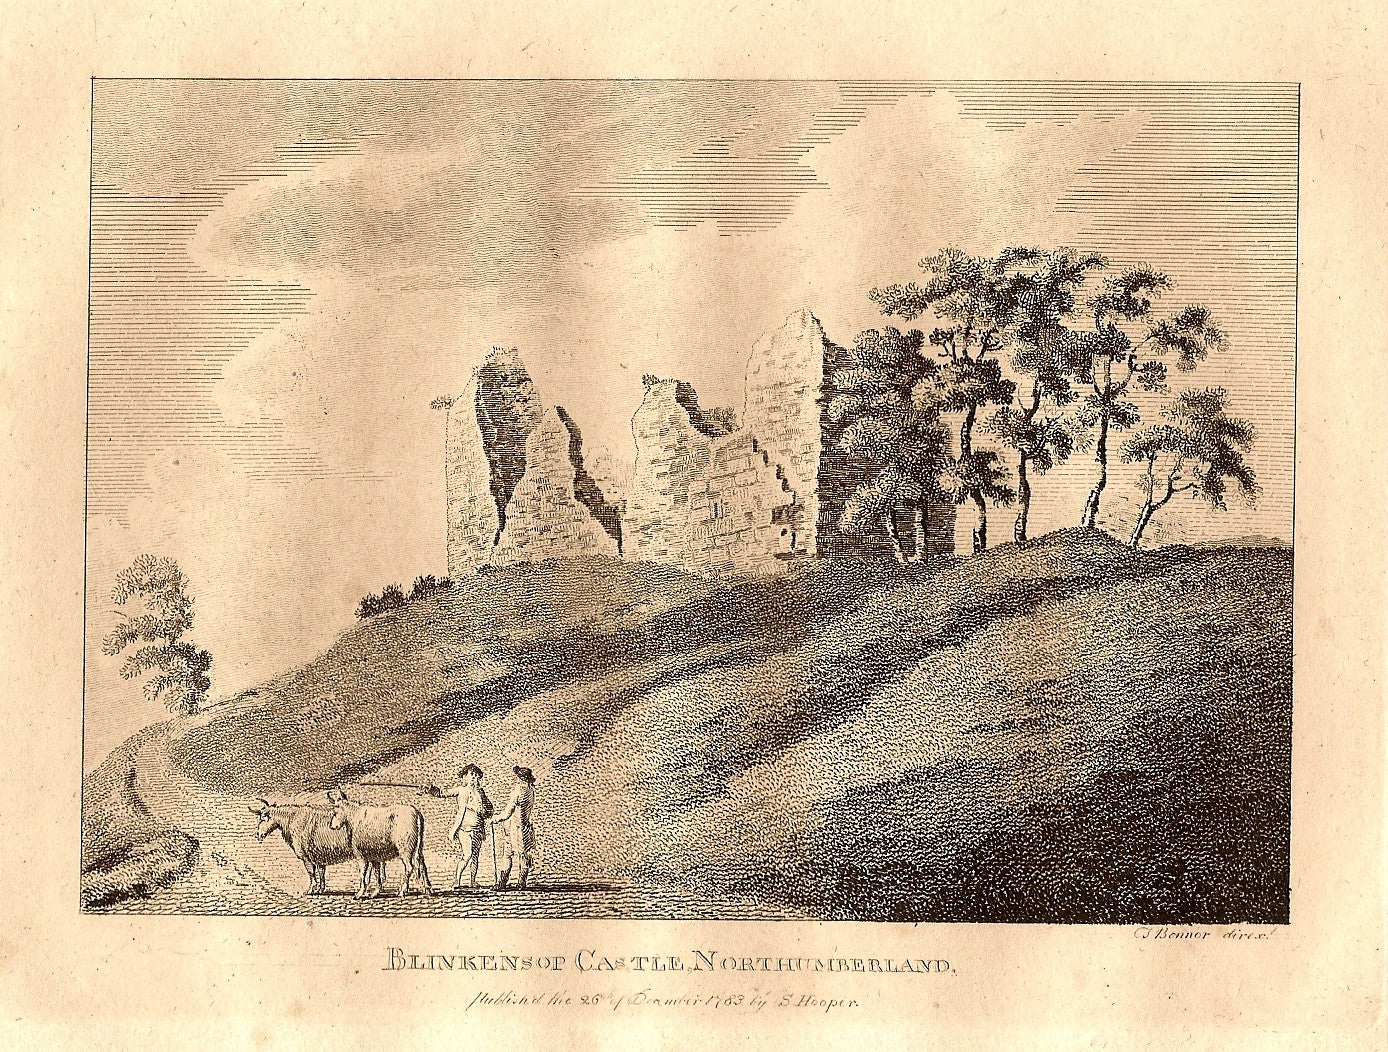 Blenkinsopp Castle Northumberland antique print